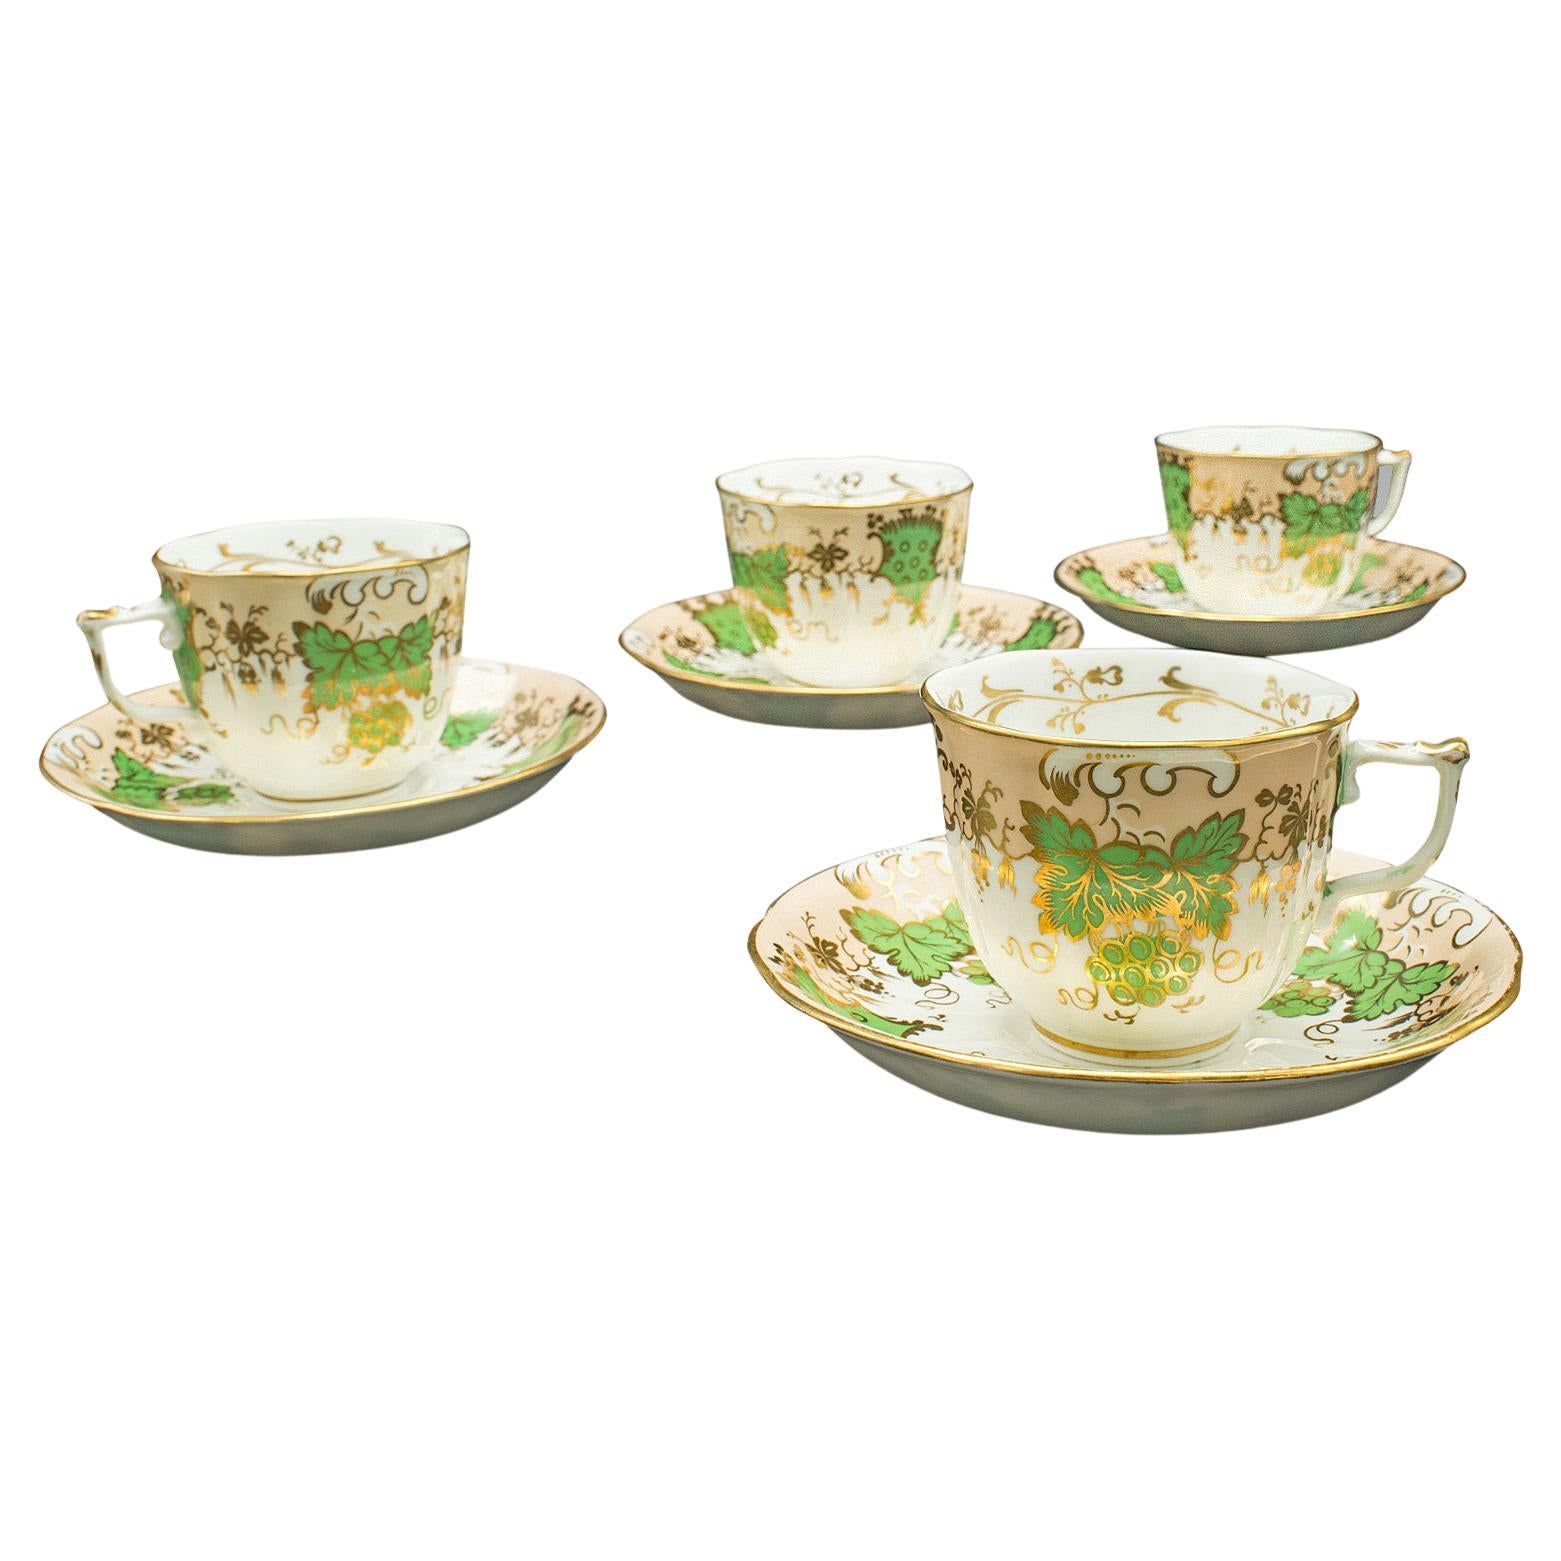 Set Of 4 Antique Tea Cups, English, Ceramic, Decorative, Cup, Saucer, Victorian